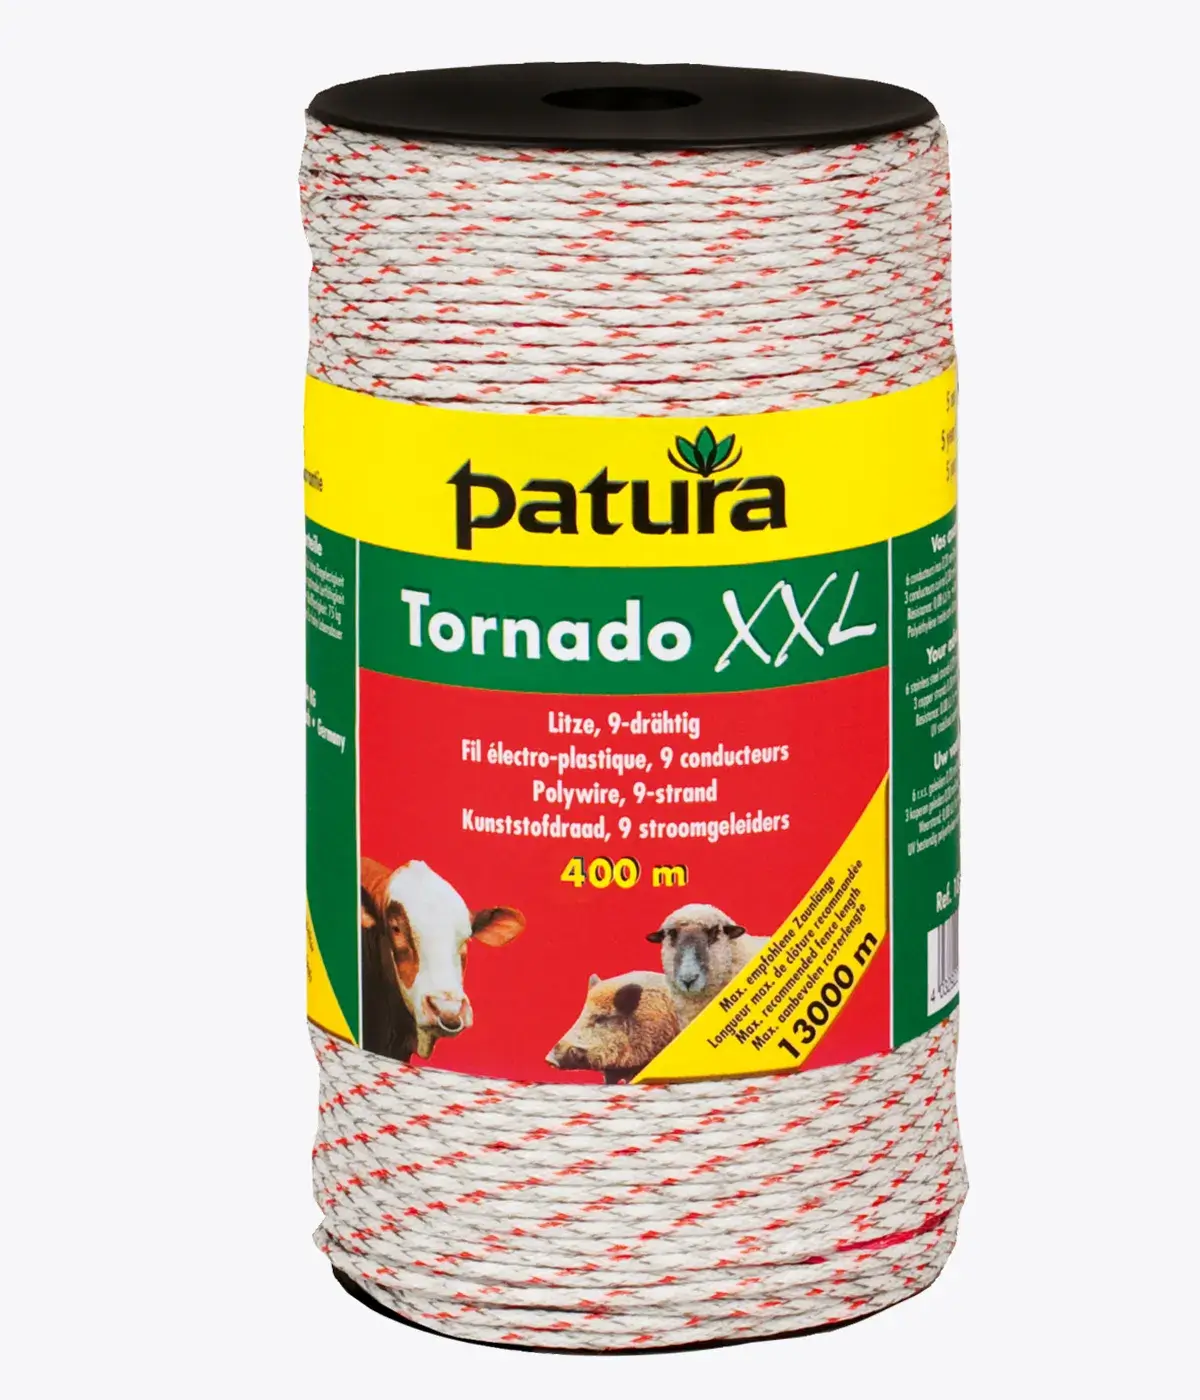 PATURA Tornado XXL Litze weiß / rot